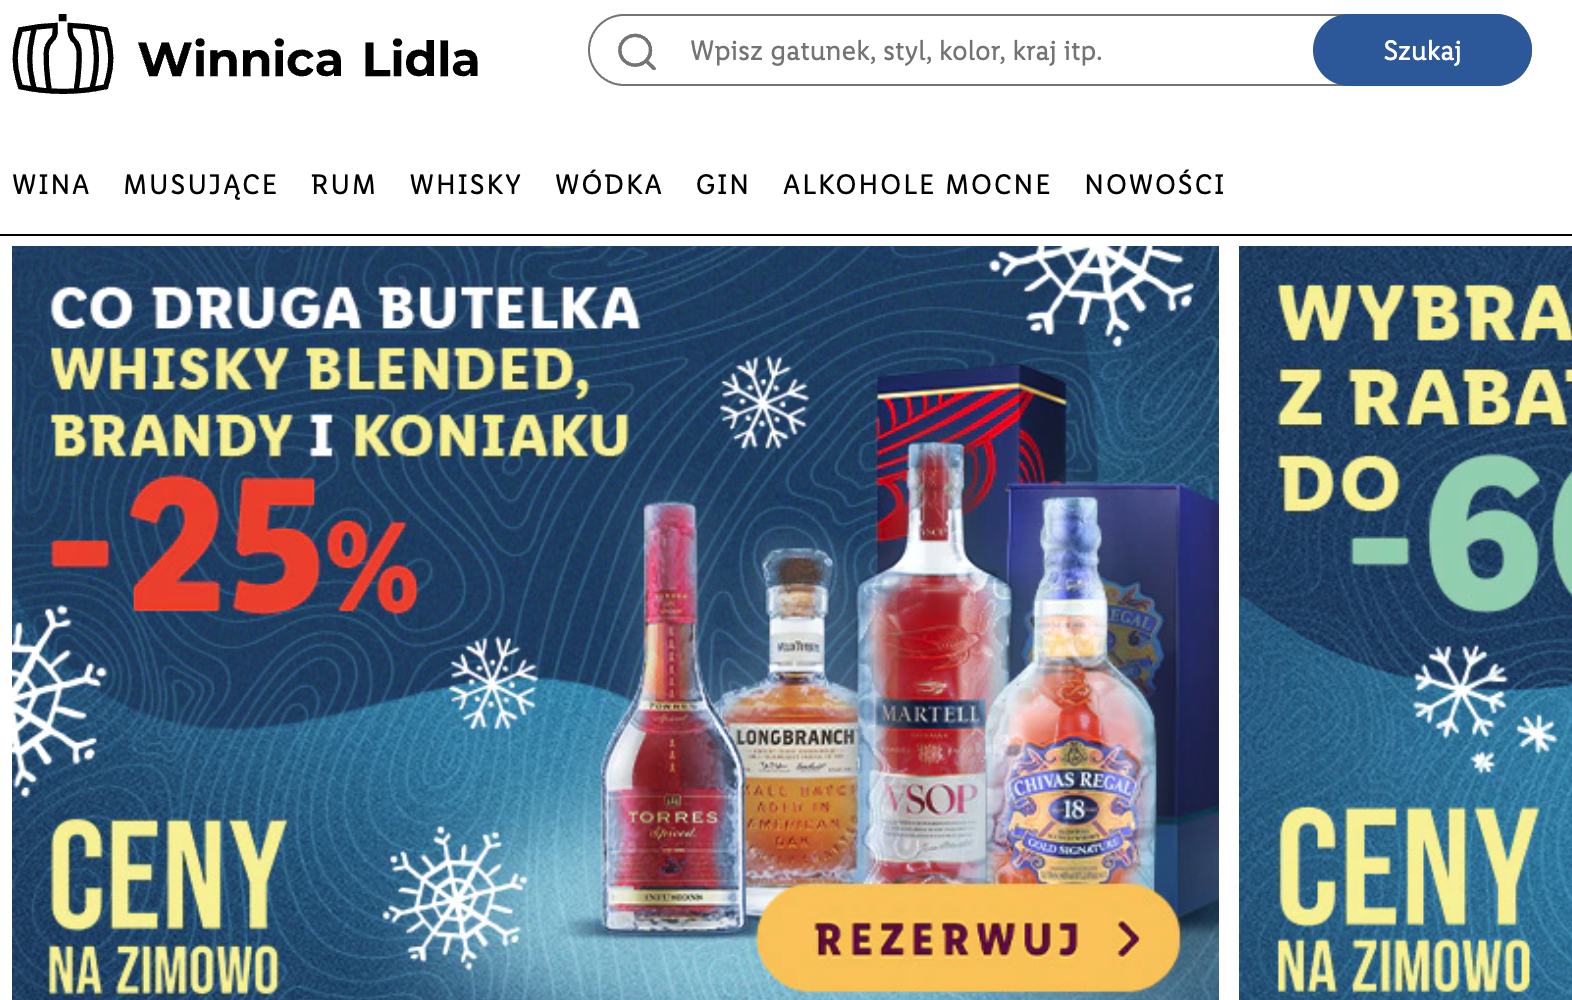 winnicalidla.pl: widok sklepu internetowego